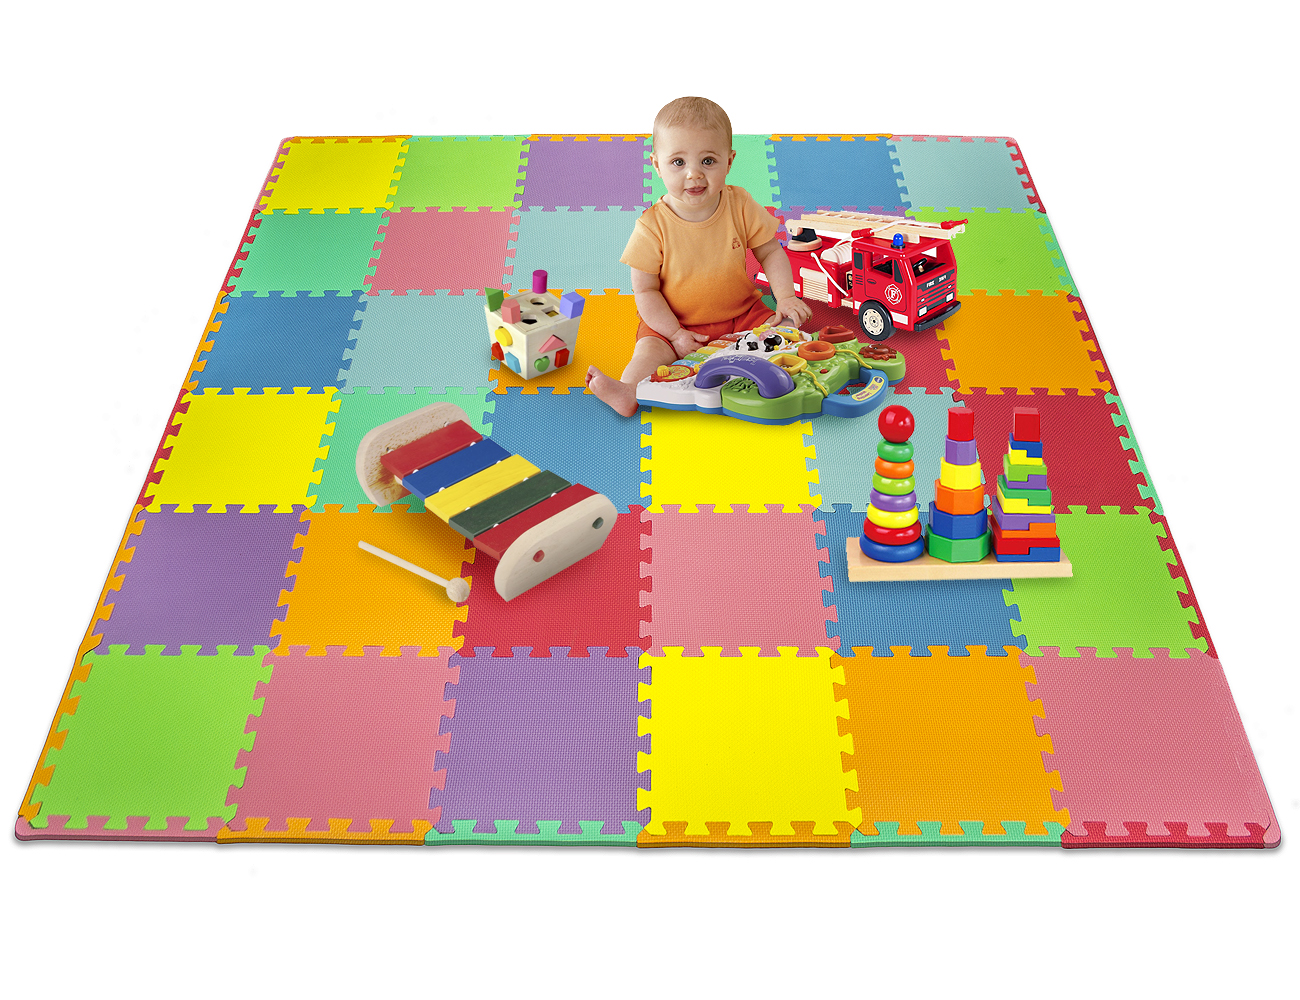 Puzzle soft play mat sensory travel 36 piece 